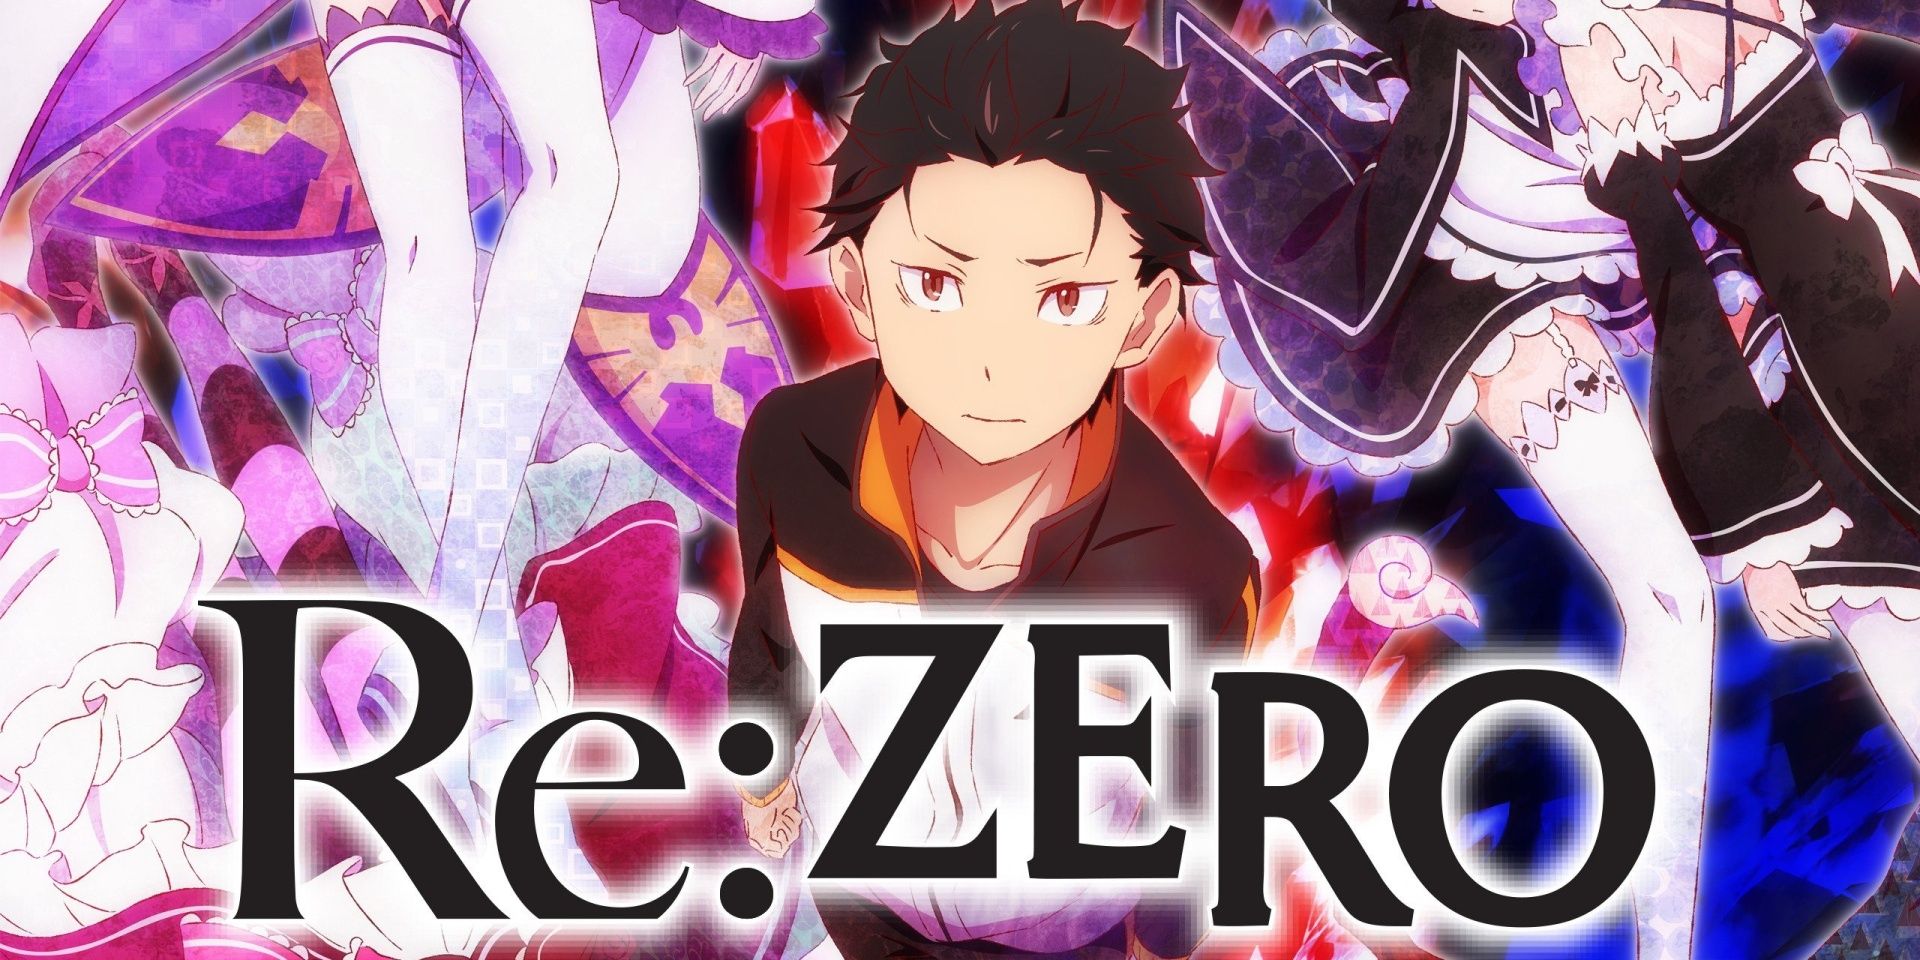 Re Zero official image